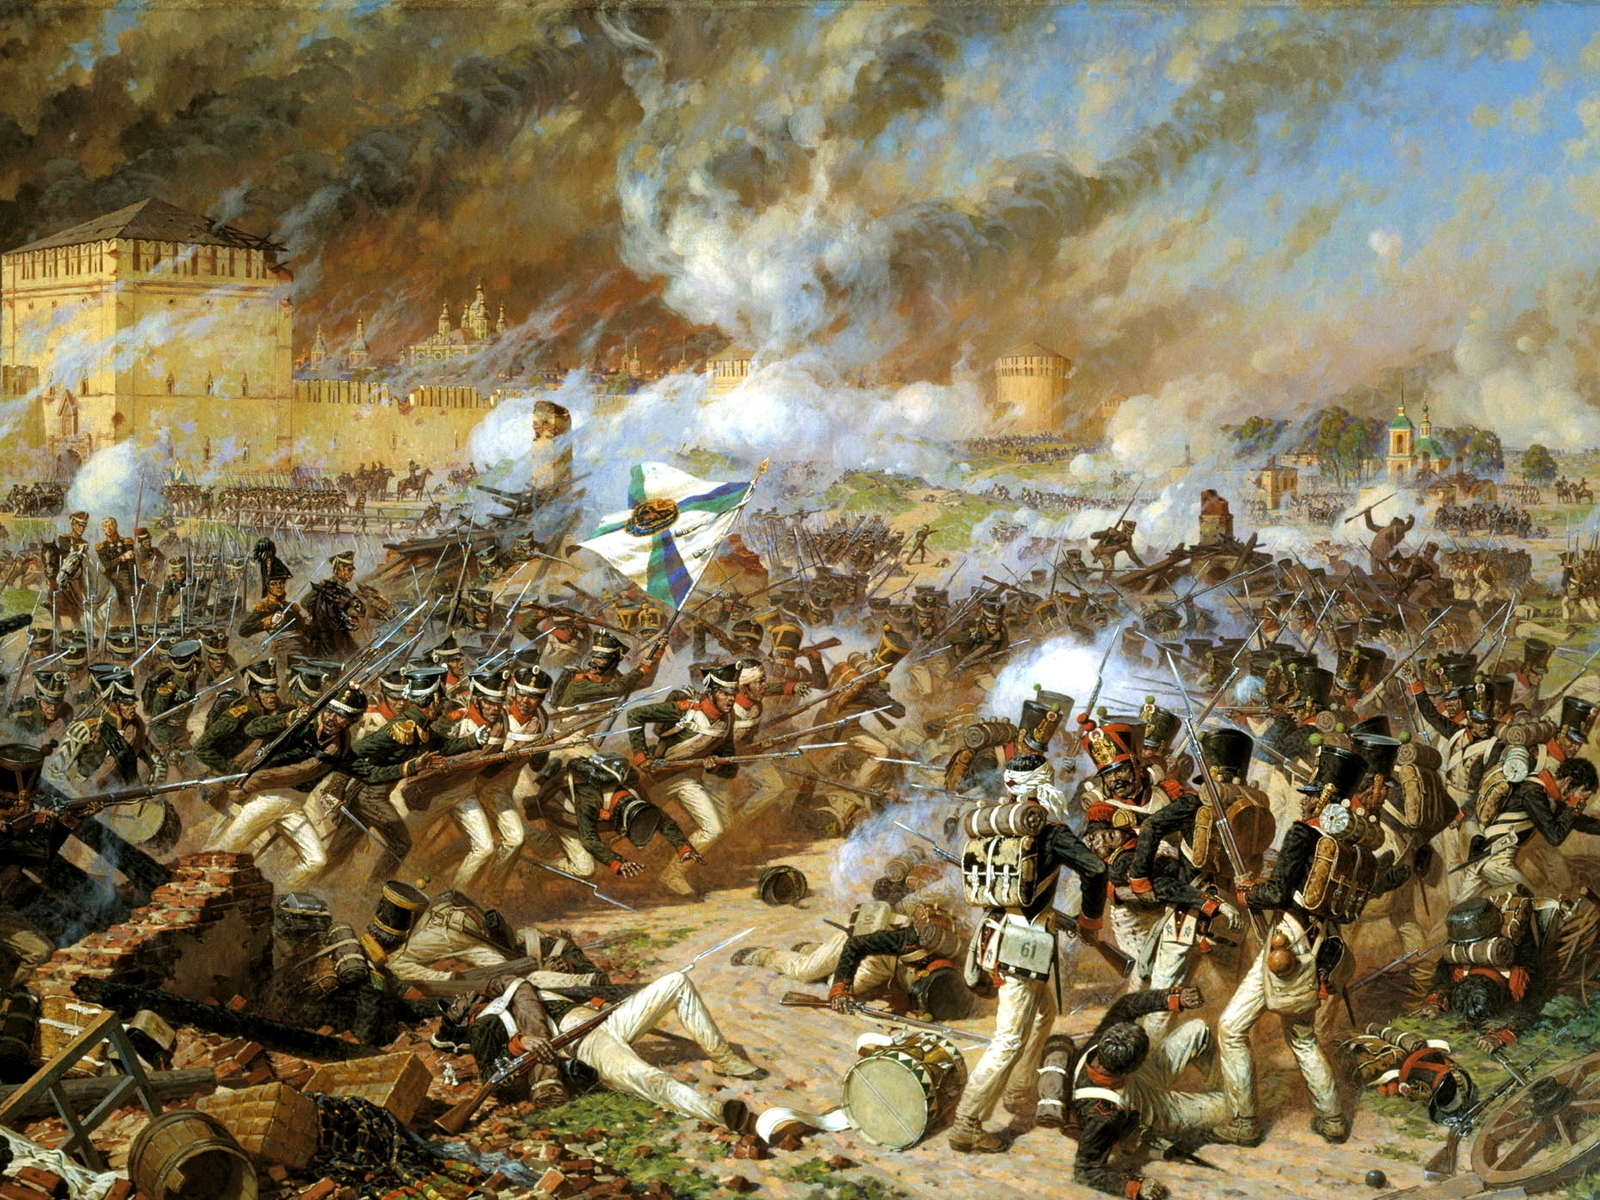 War Scene Paint for 1600 x 1200 resolution